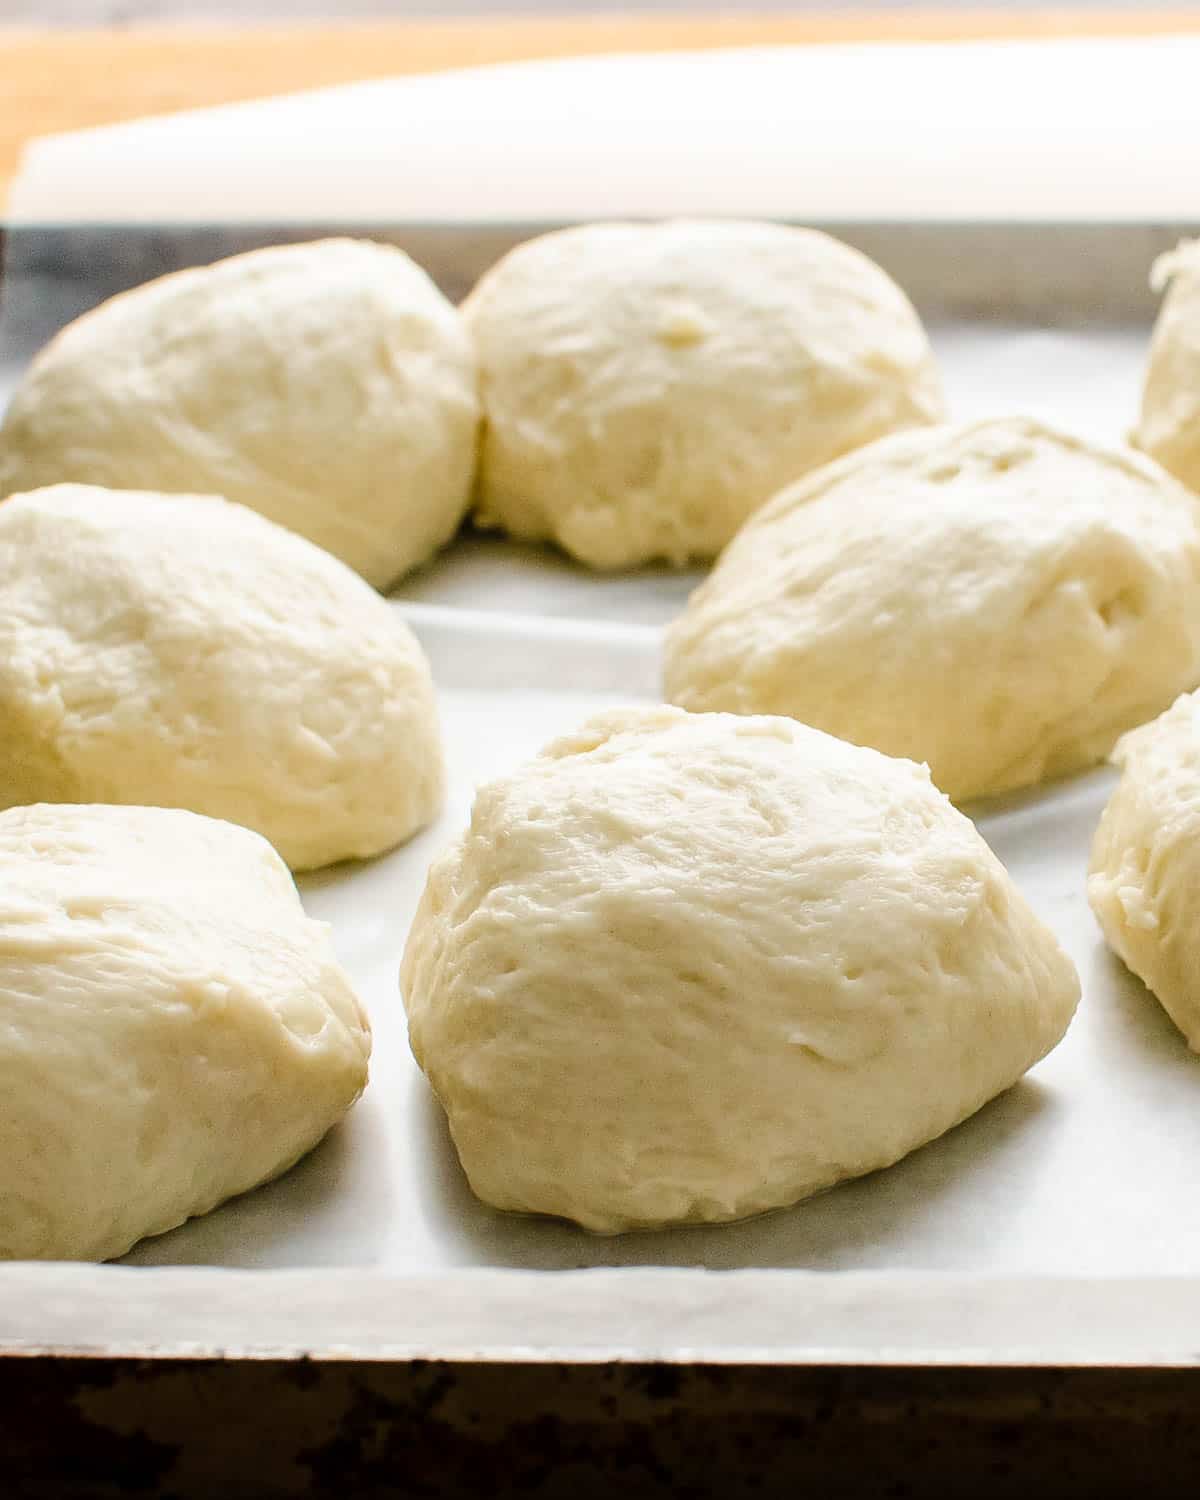 Transfer the dough balls to a baking sheet.